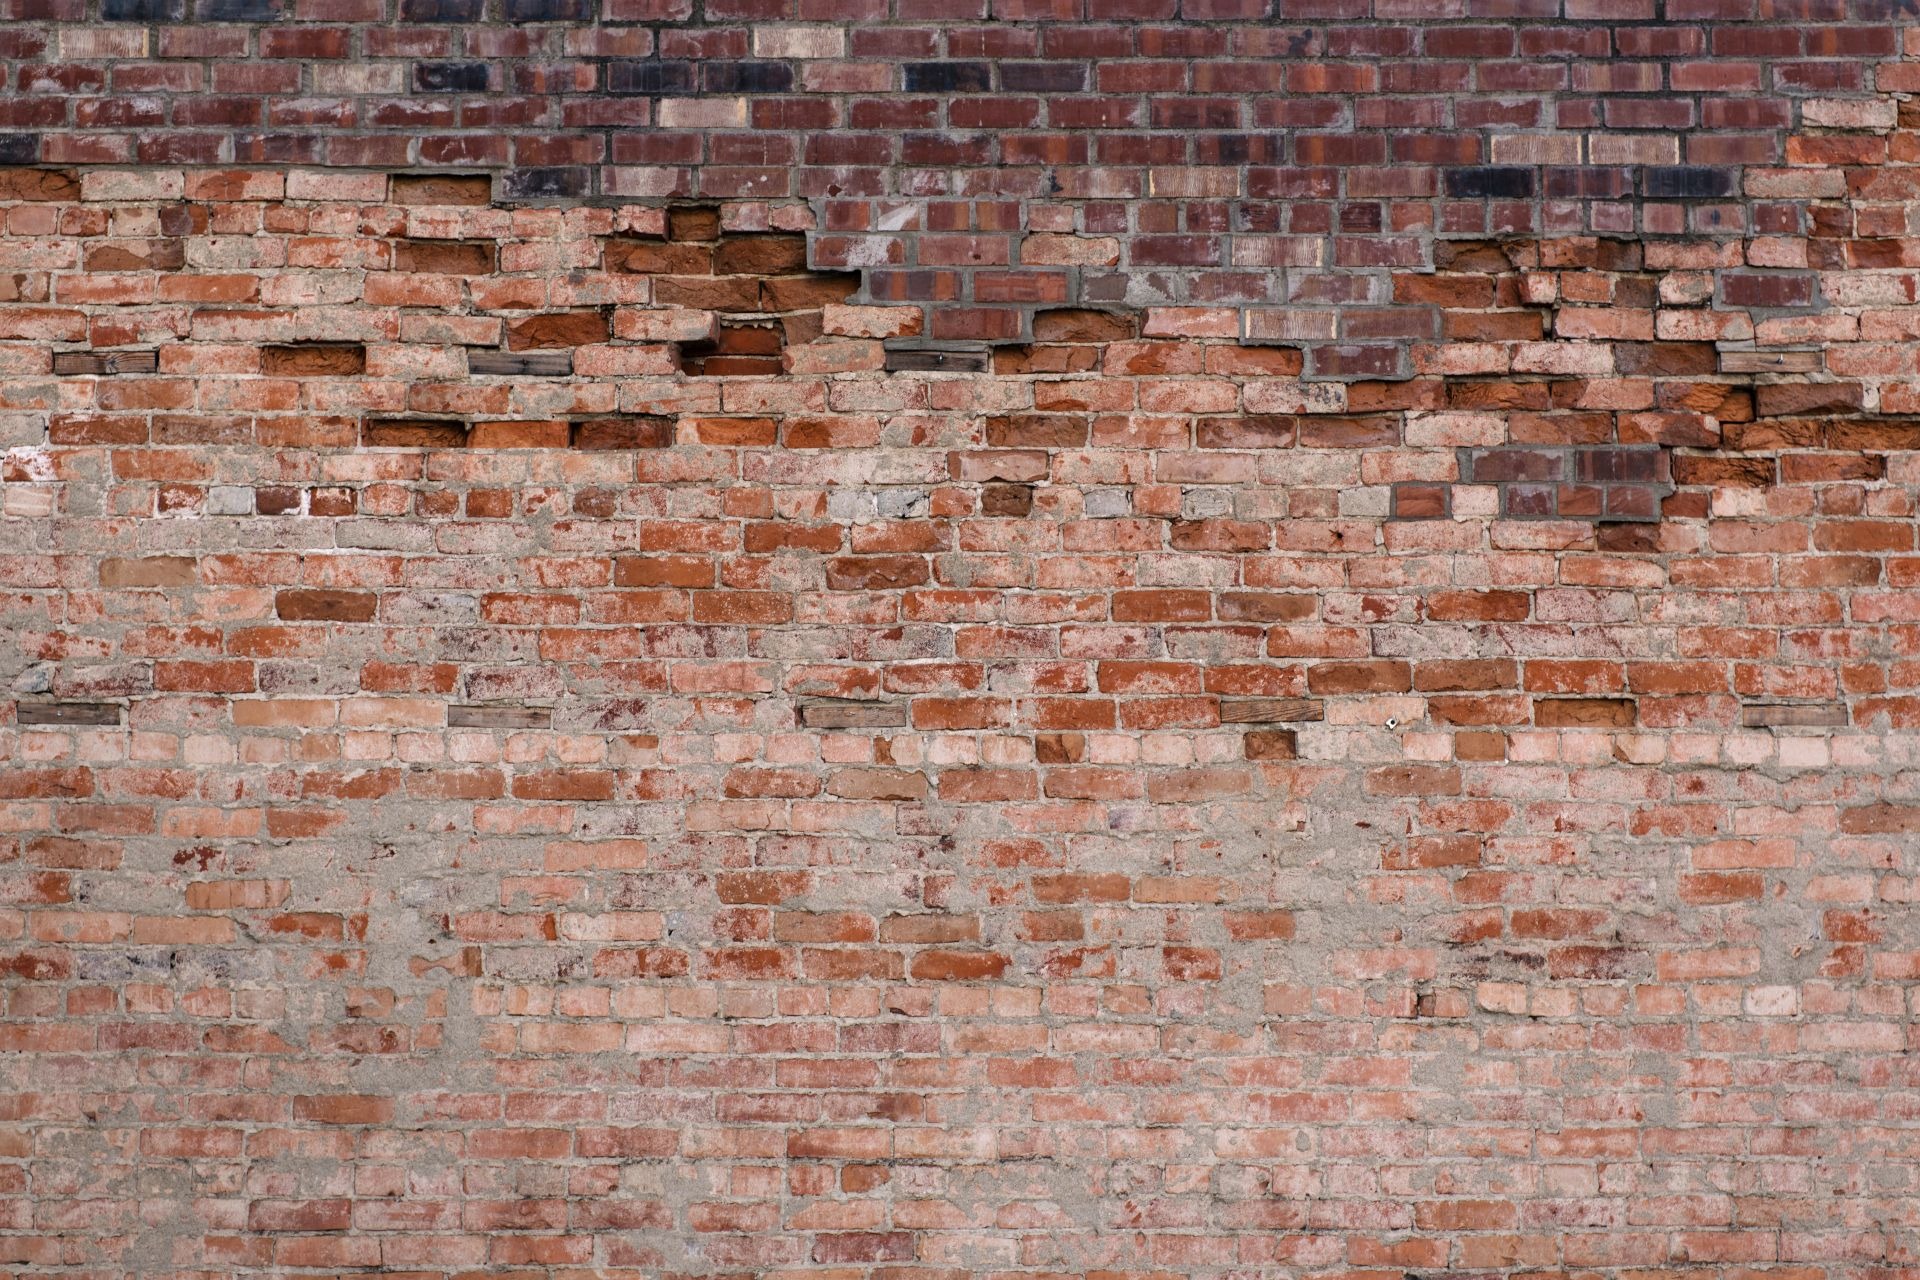 an image of period bricks